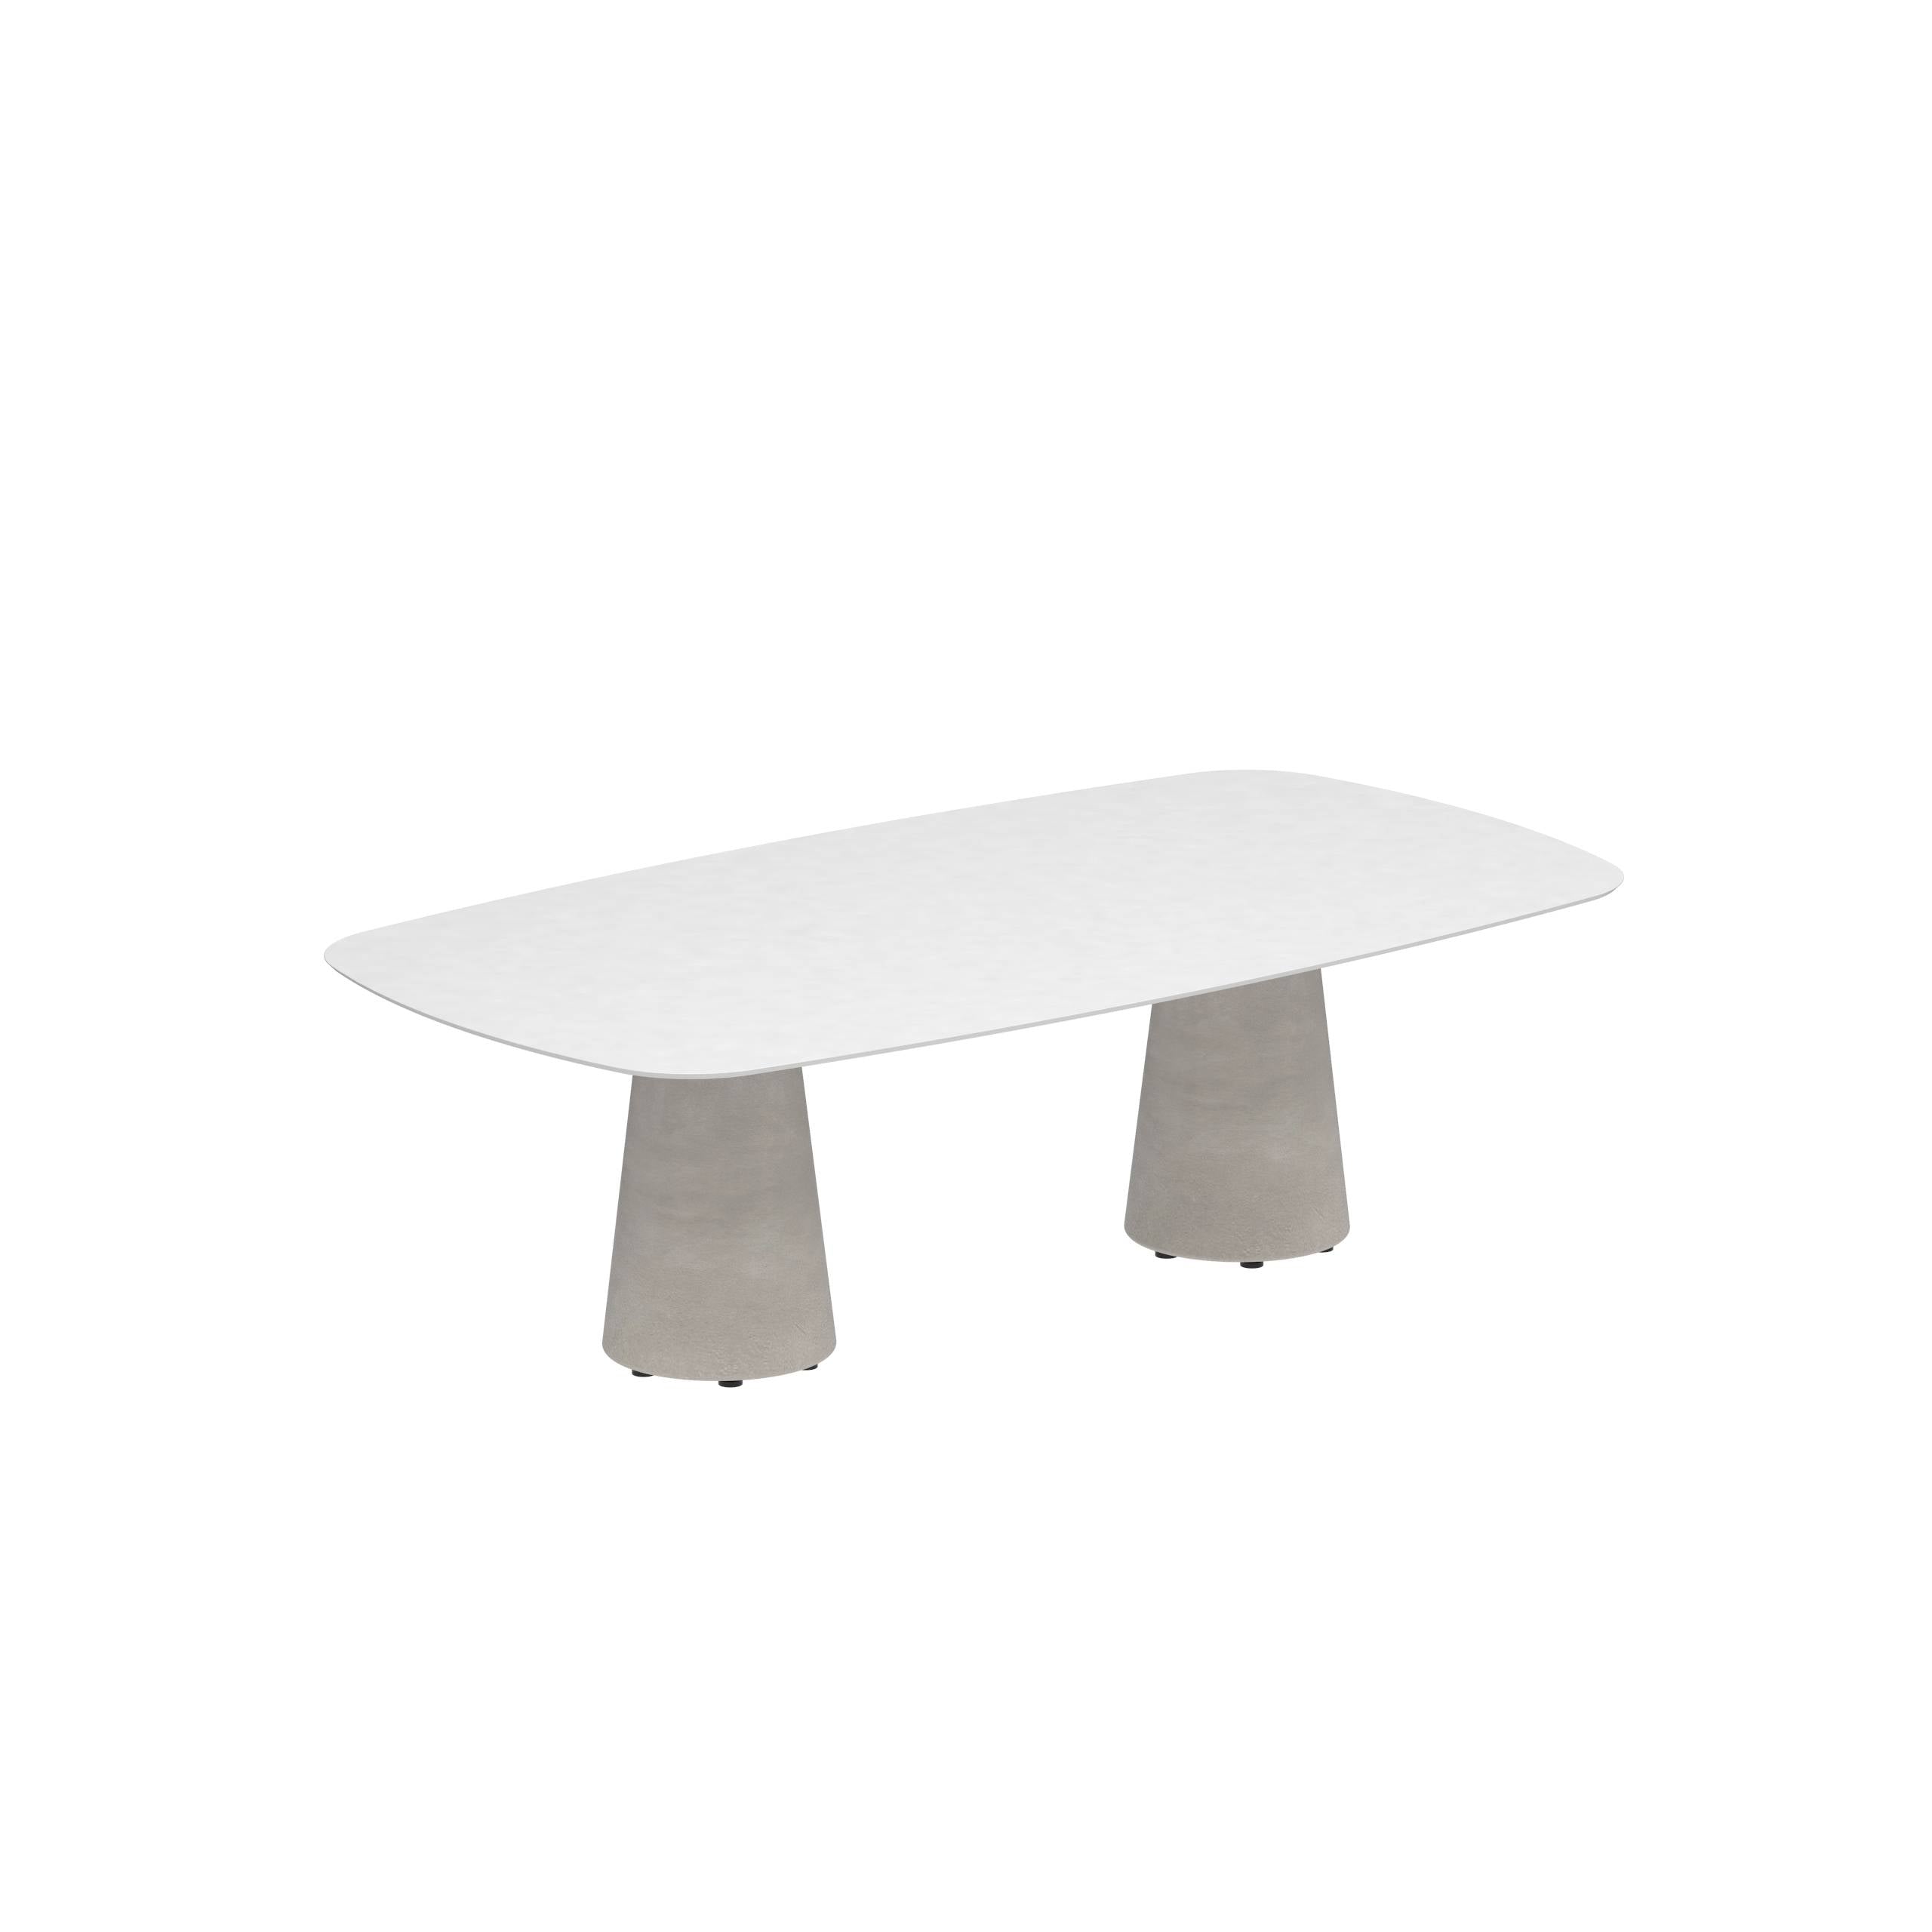 Conix Table 220x120 Cm Low Dining Legs Concrete Cement Grey - Table Top Ceramic White